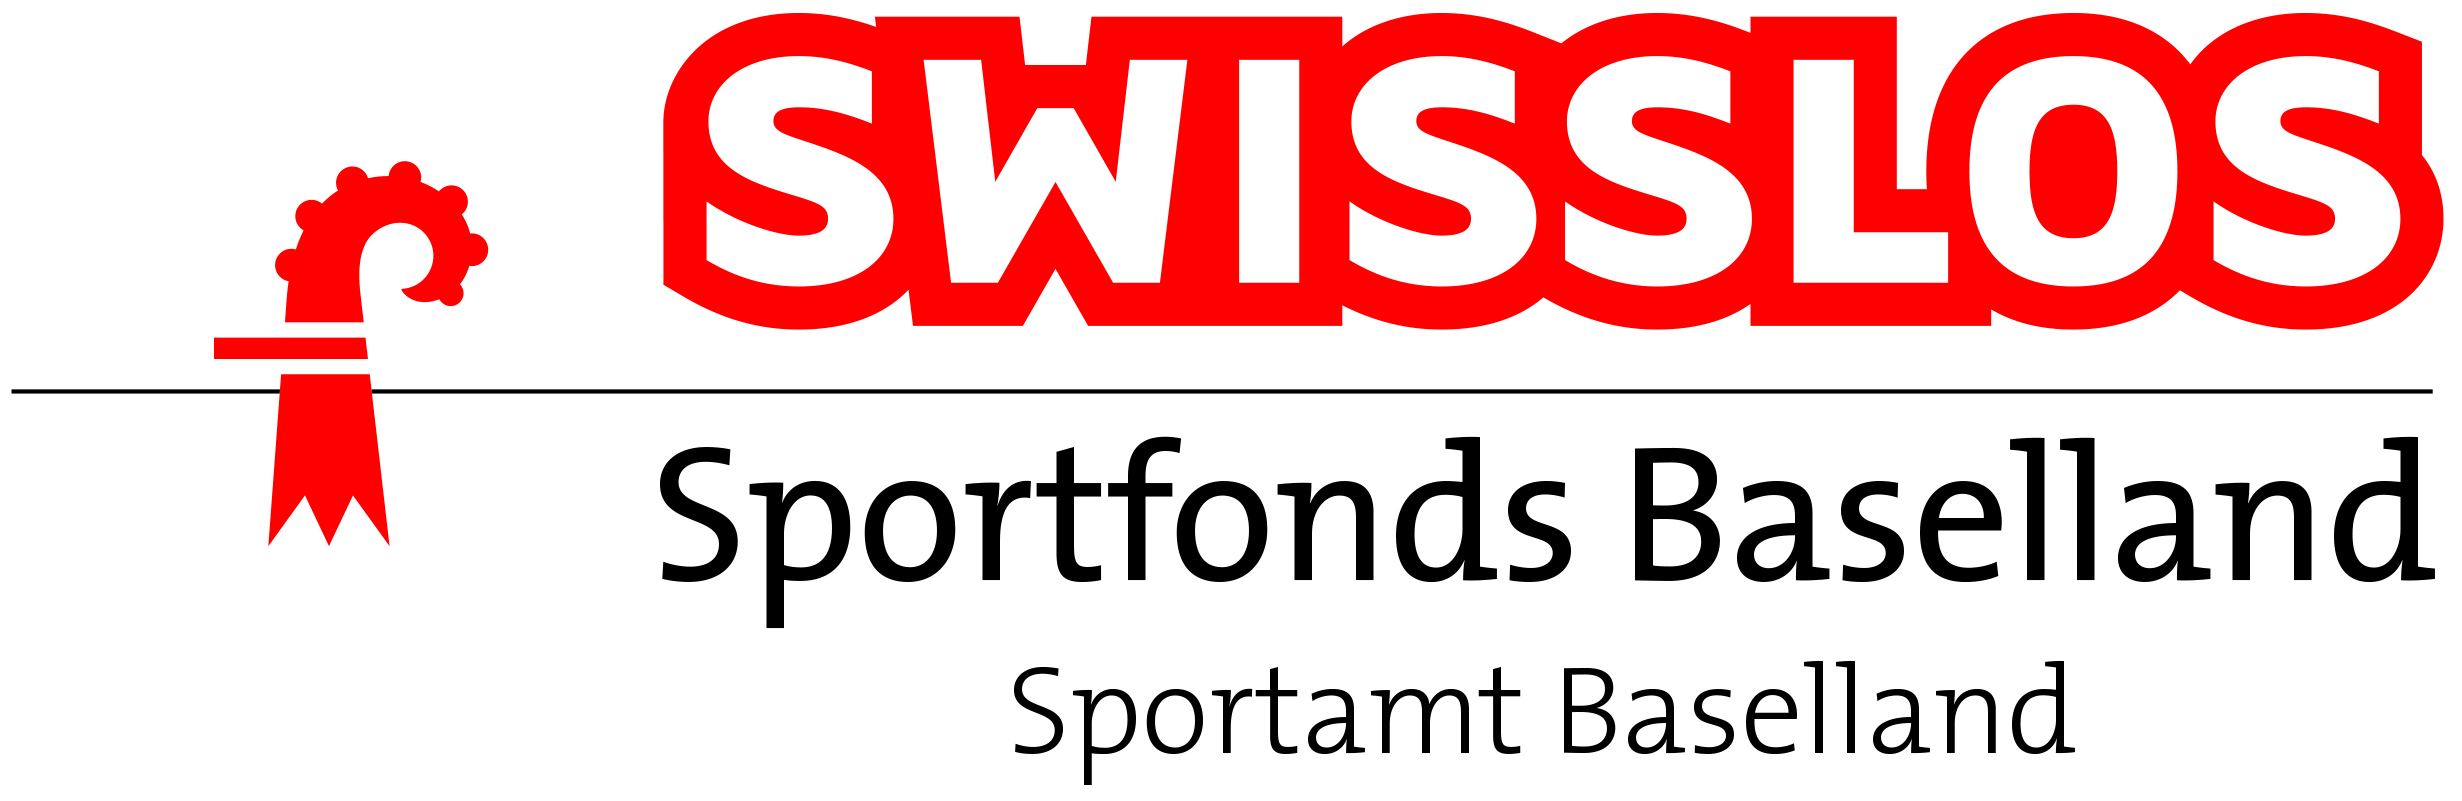 Sportamt Baselland Swisslos Sportfonds Baselland